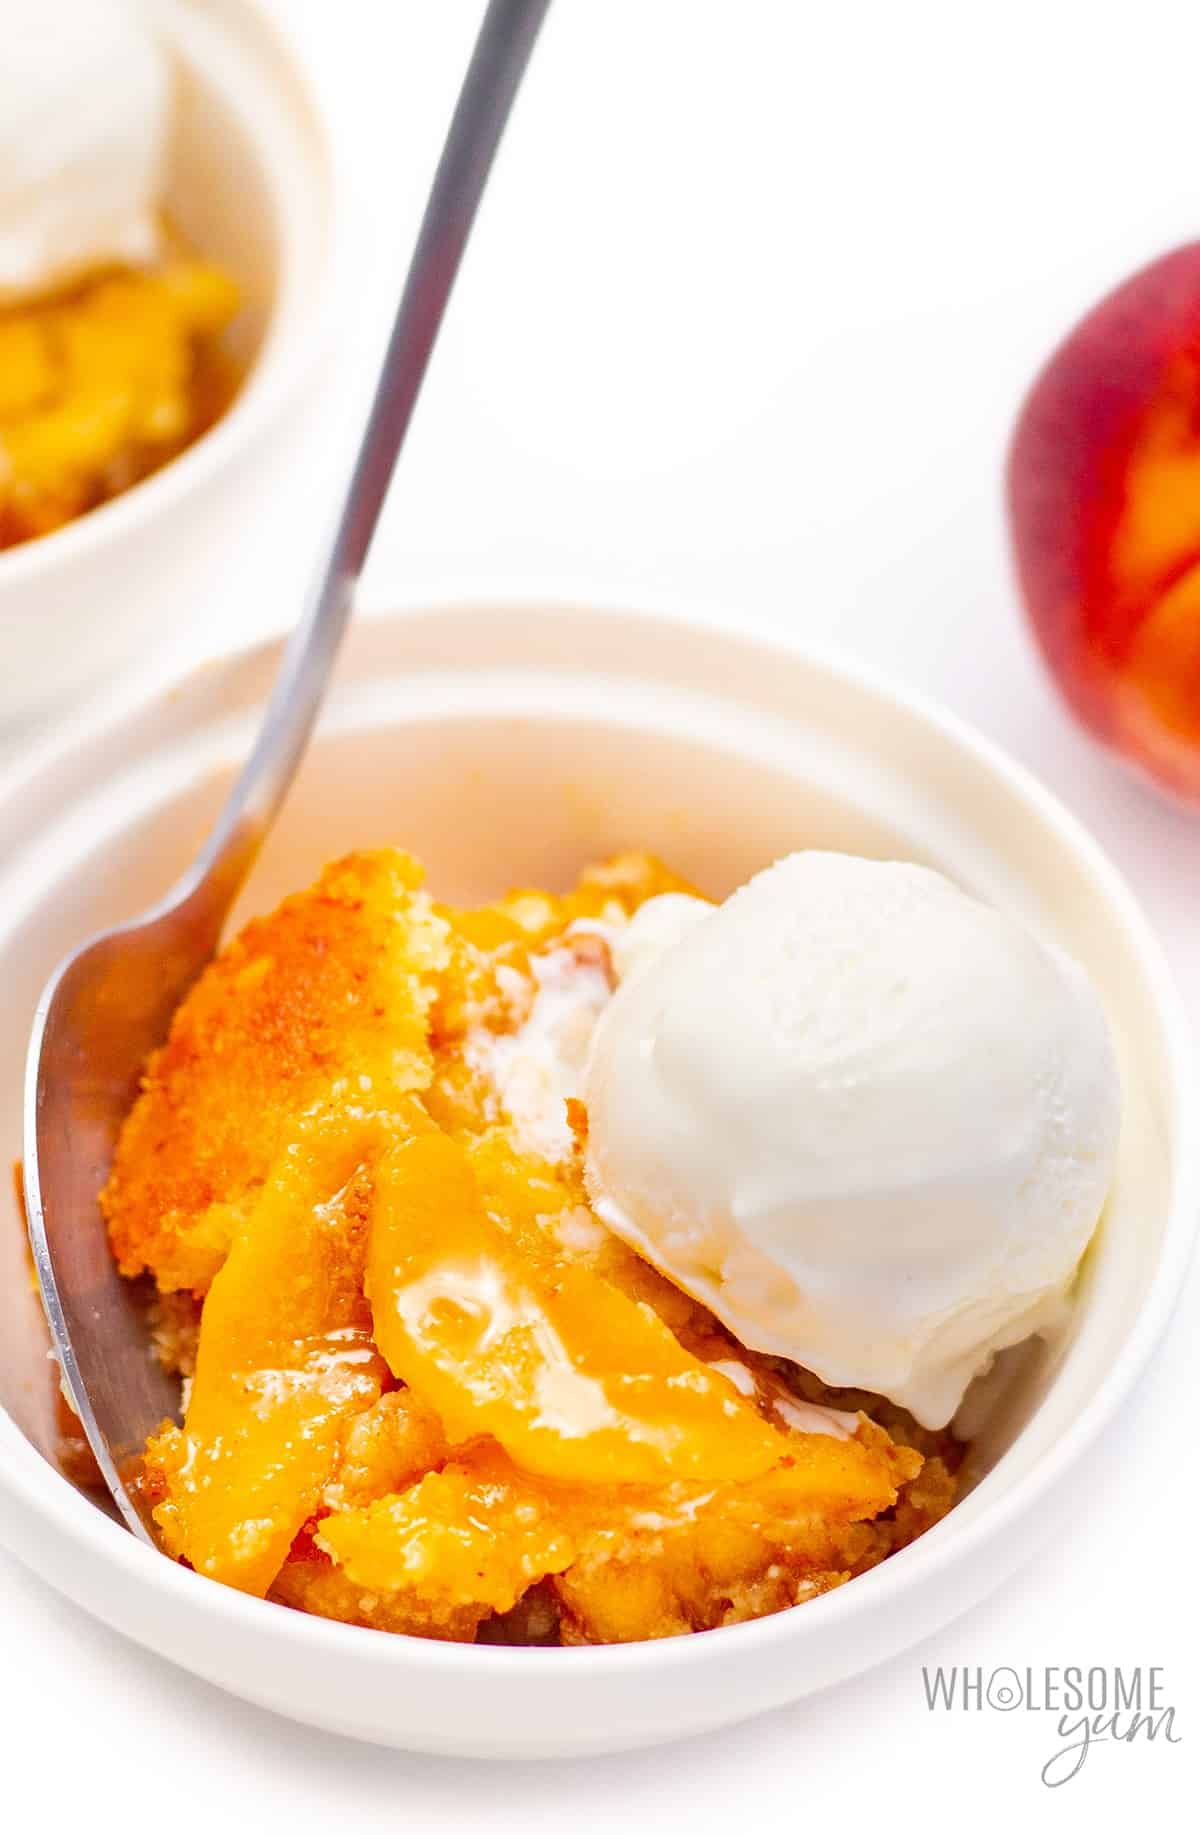 Sugar-free peach cobbler in bowl with spoon.